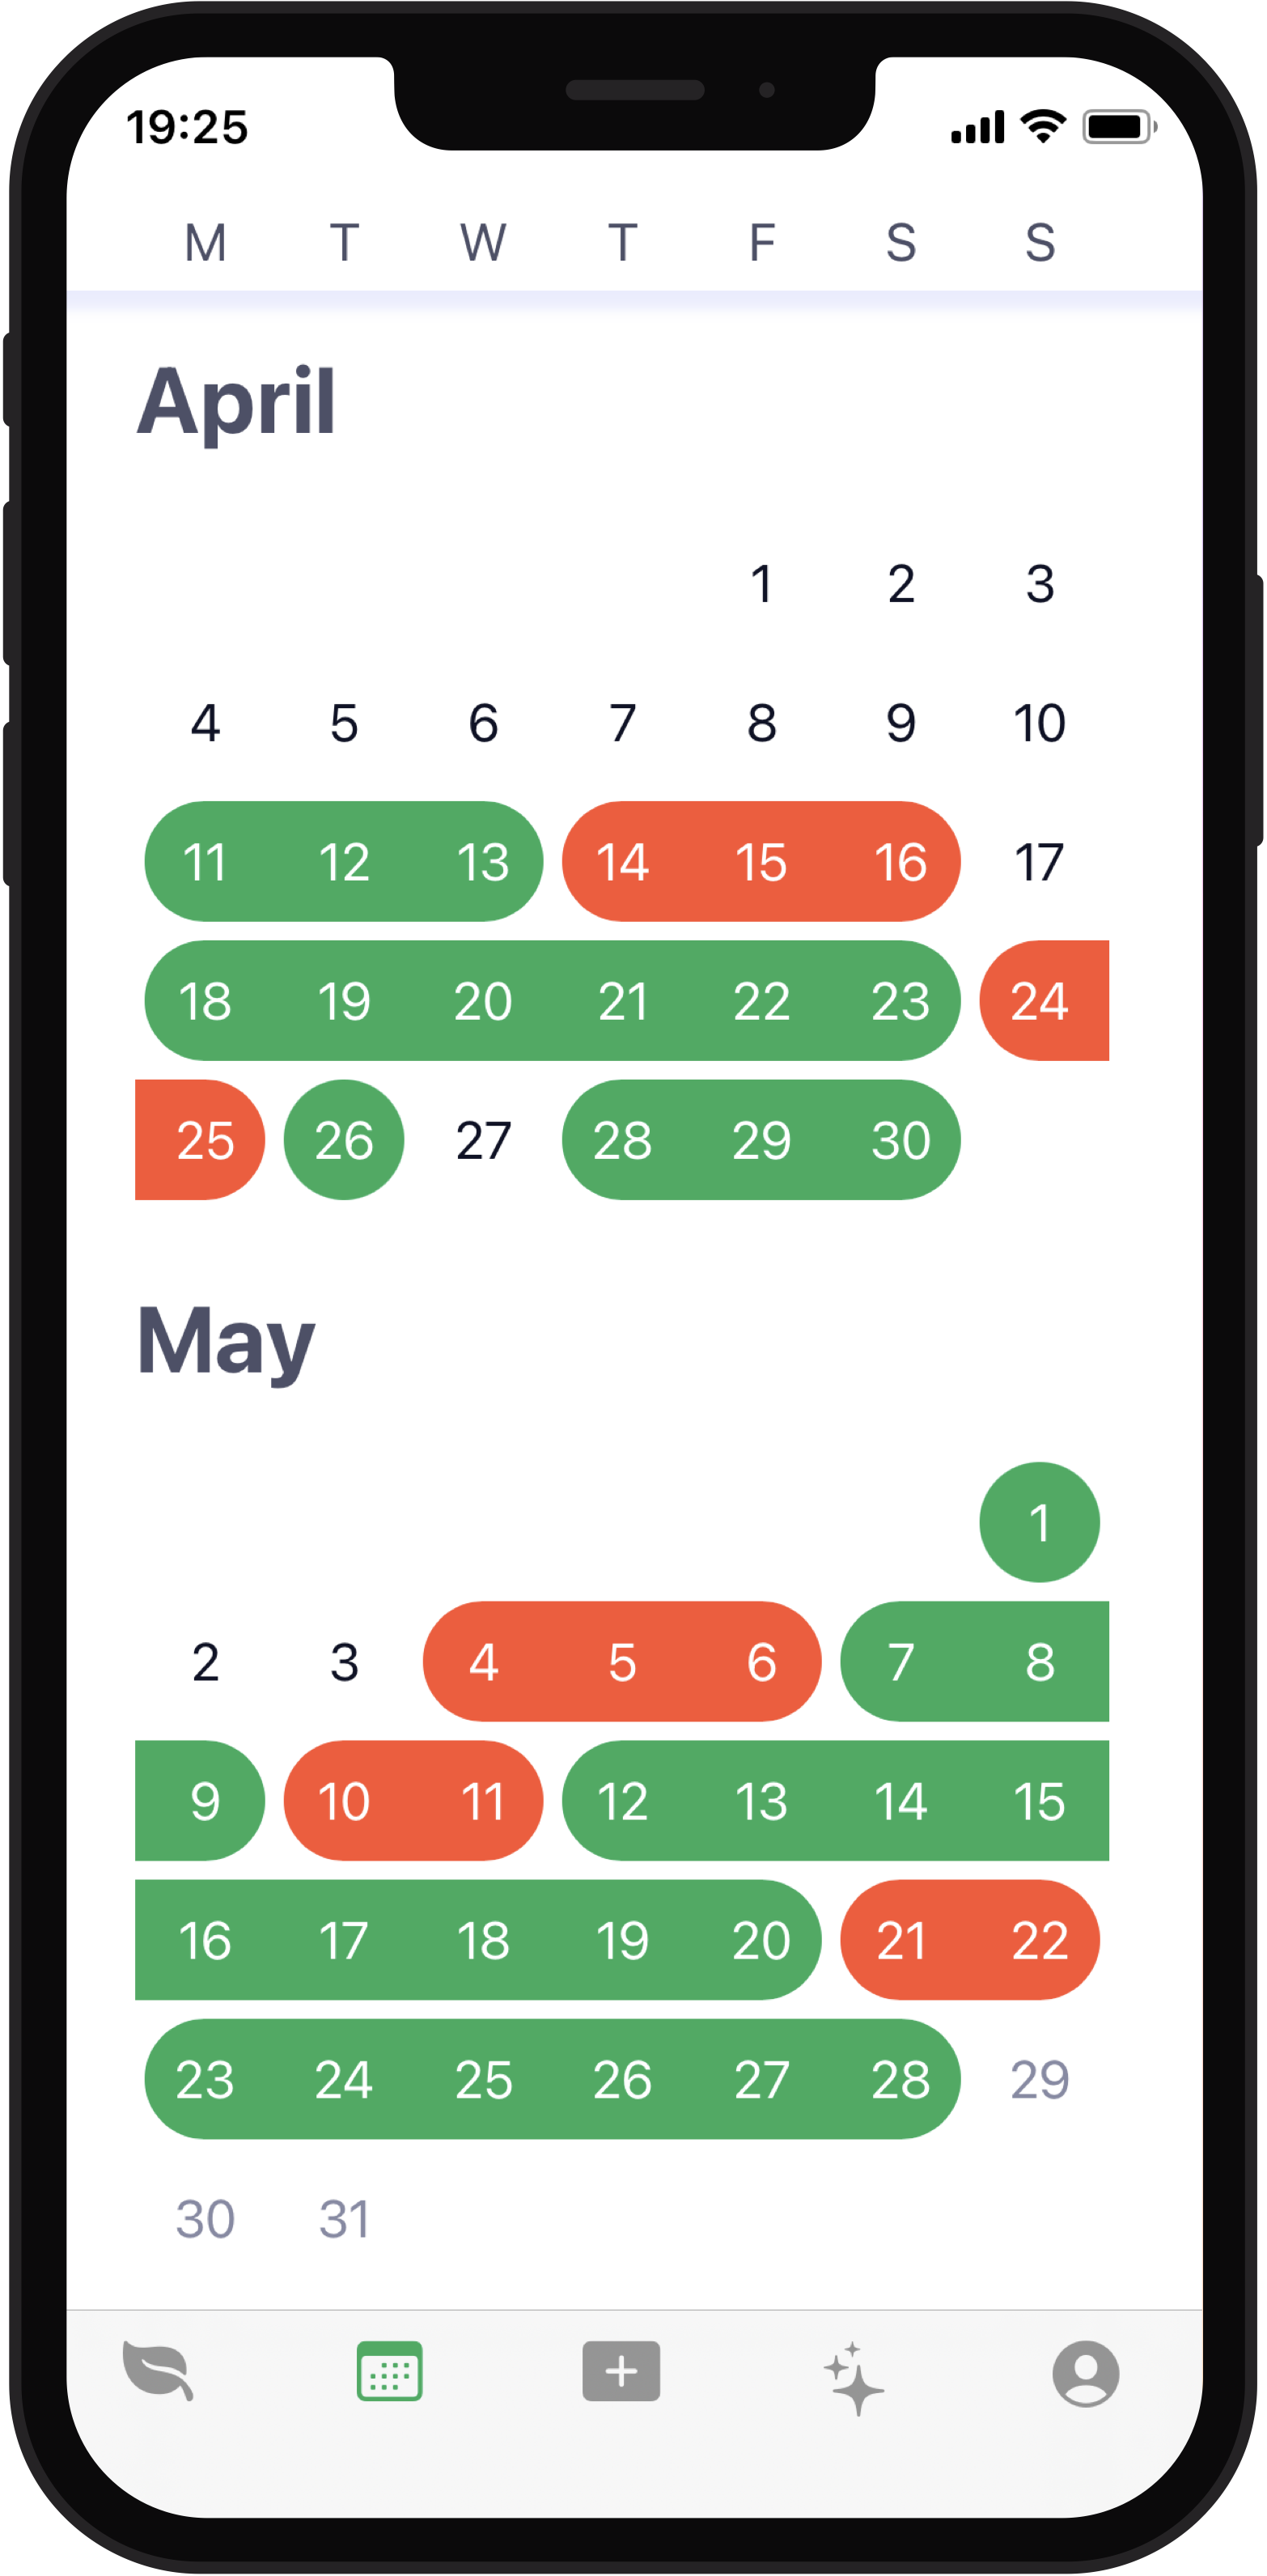 Screenshot of an app showing encouragement based on progress